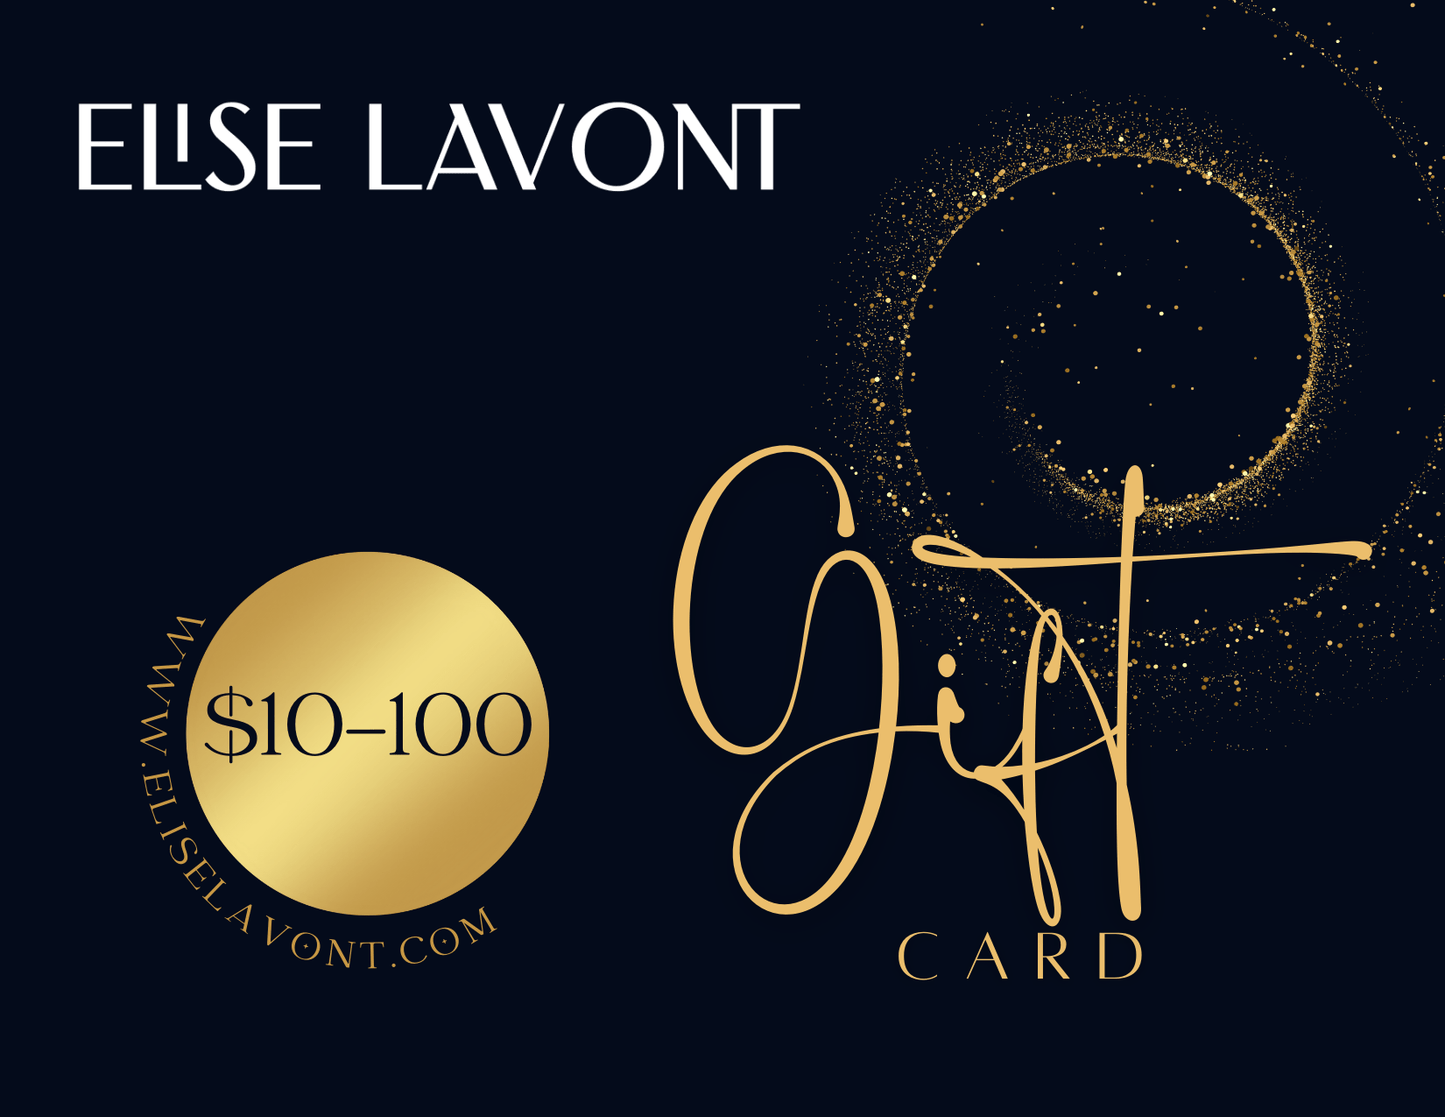 Elise Lavont Gift Card - Elise Lavont